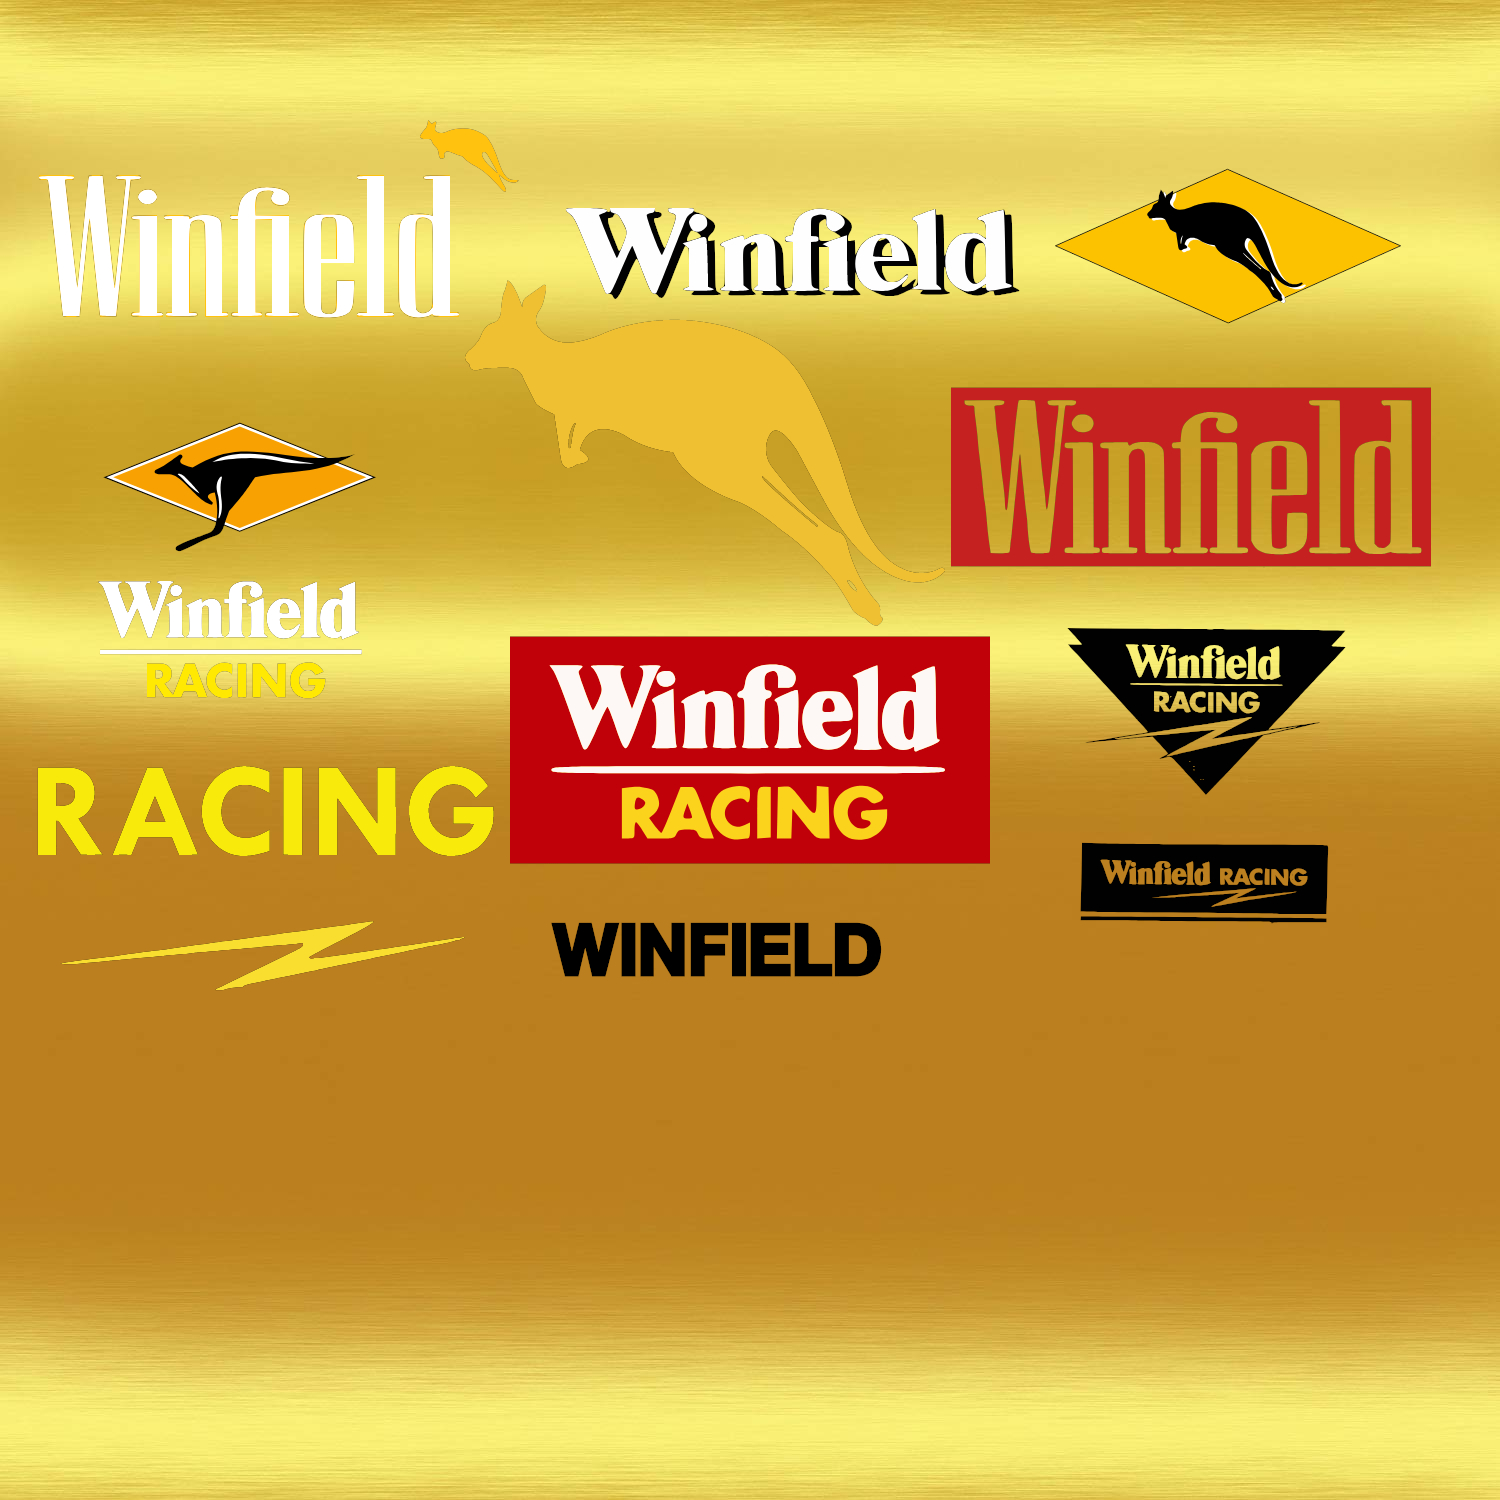 Winfield logos.jpg